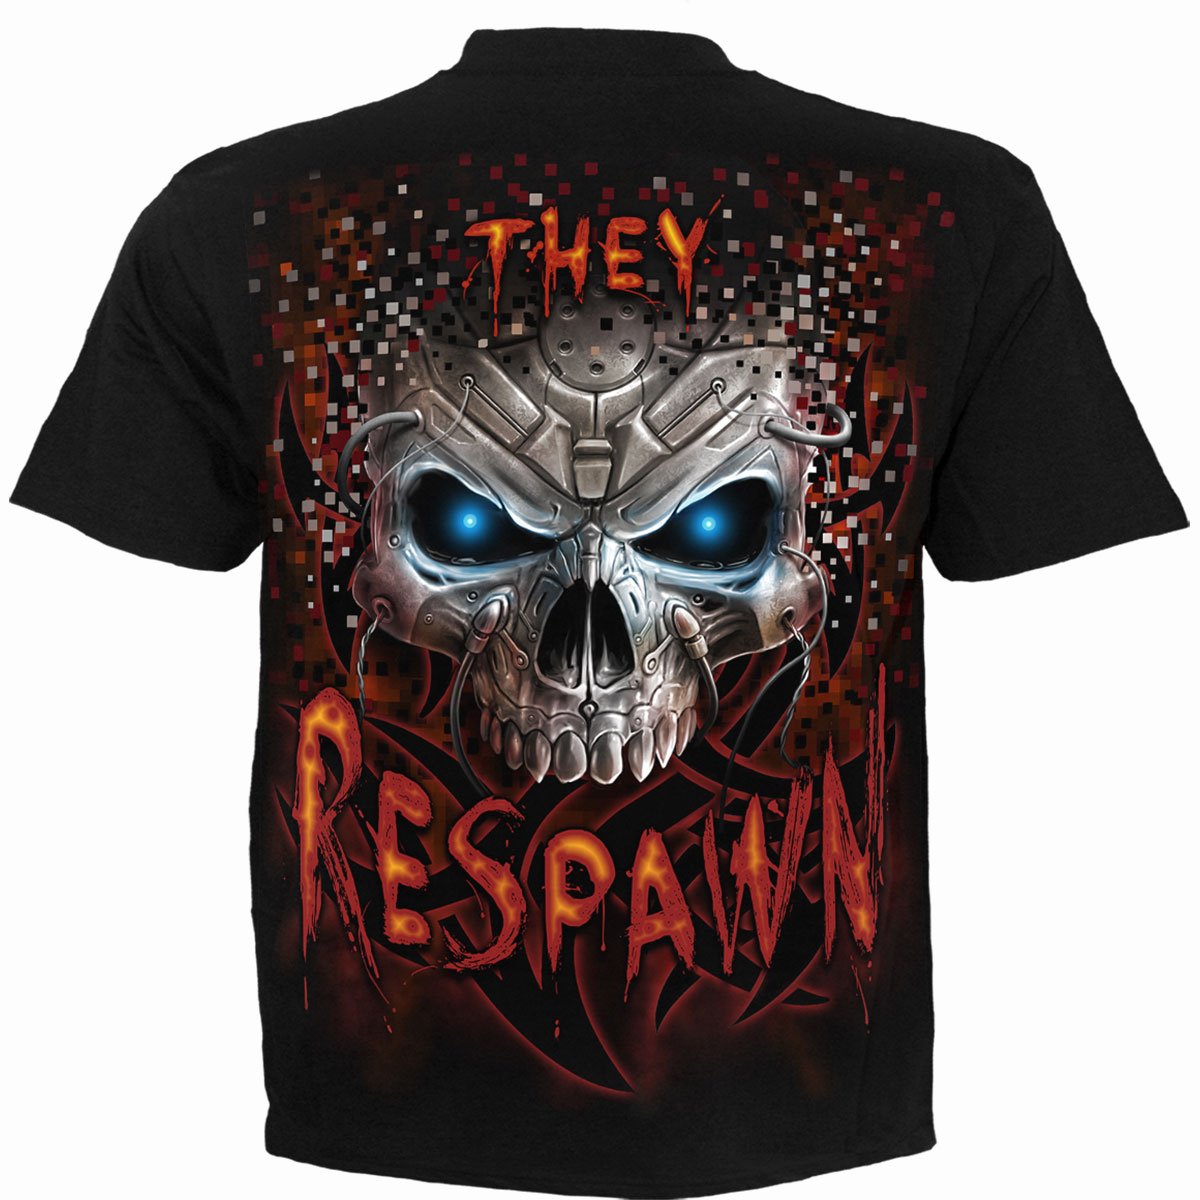 RESPAWN - T-Shirt czarny